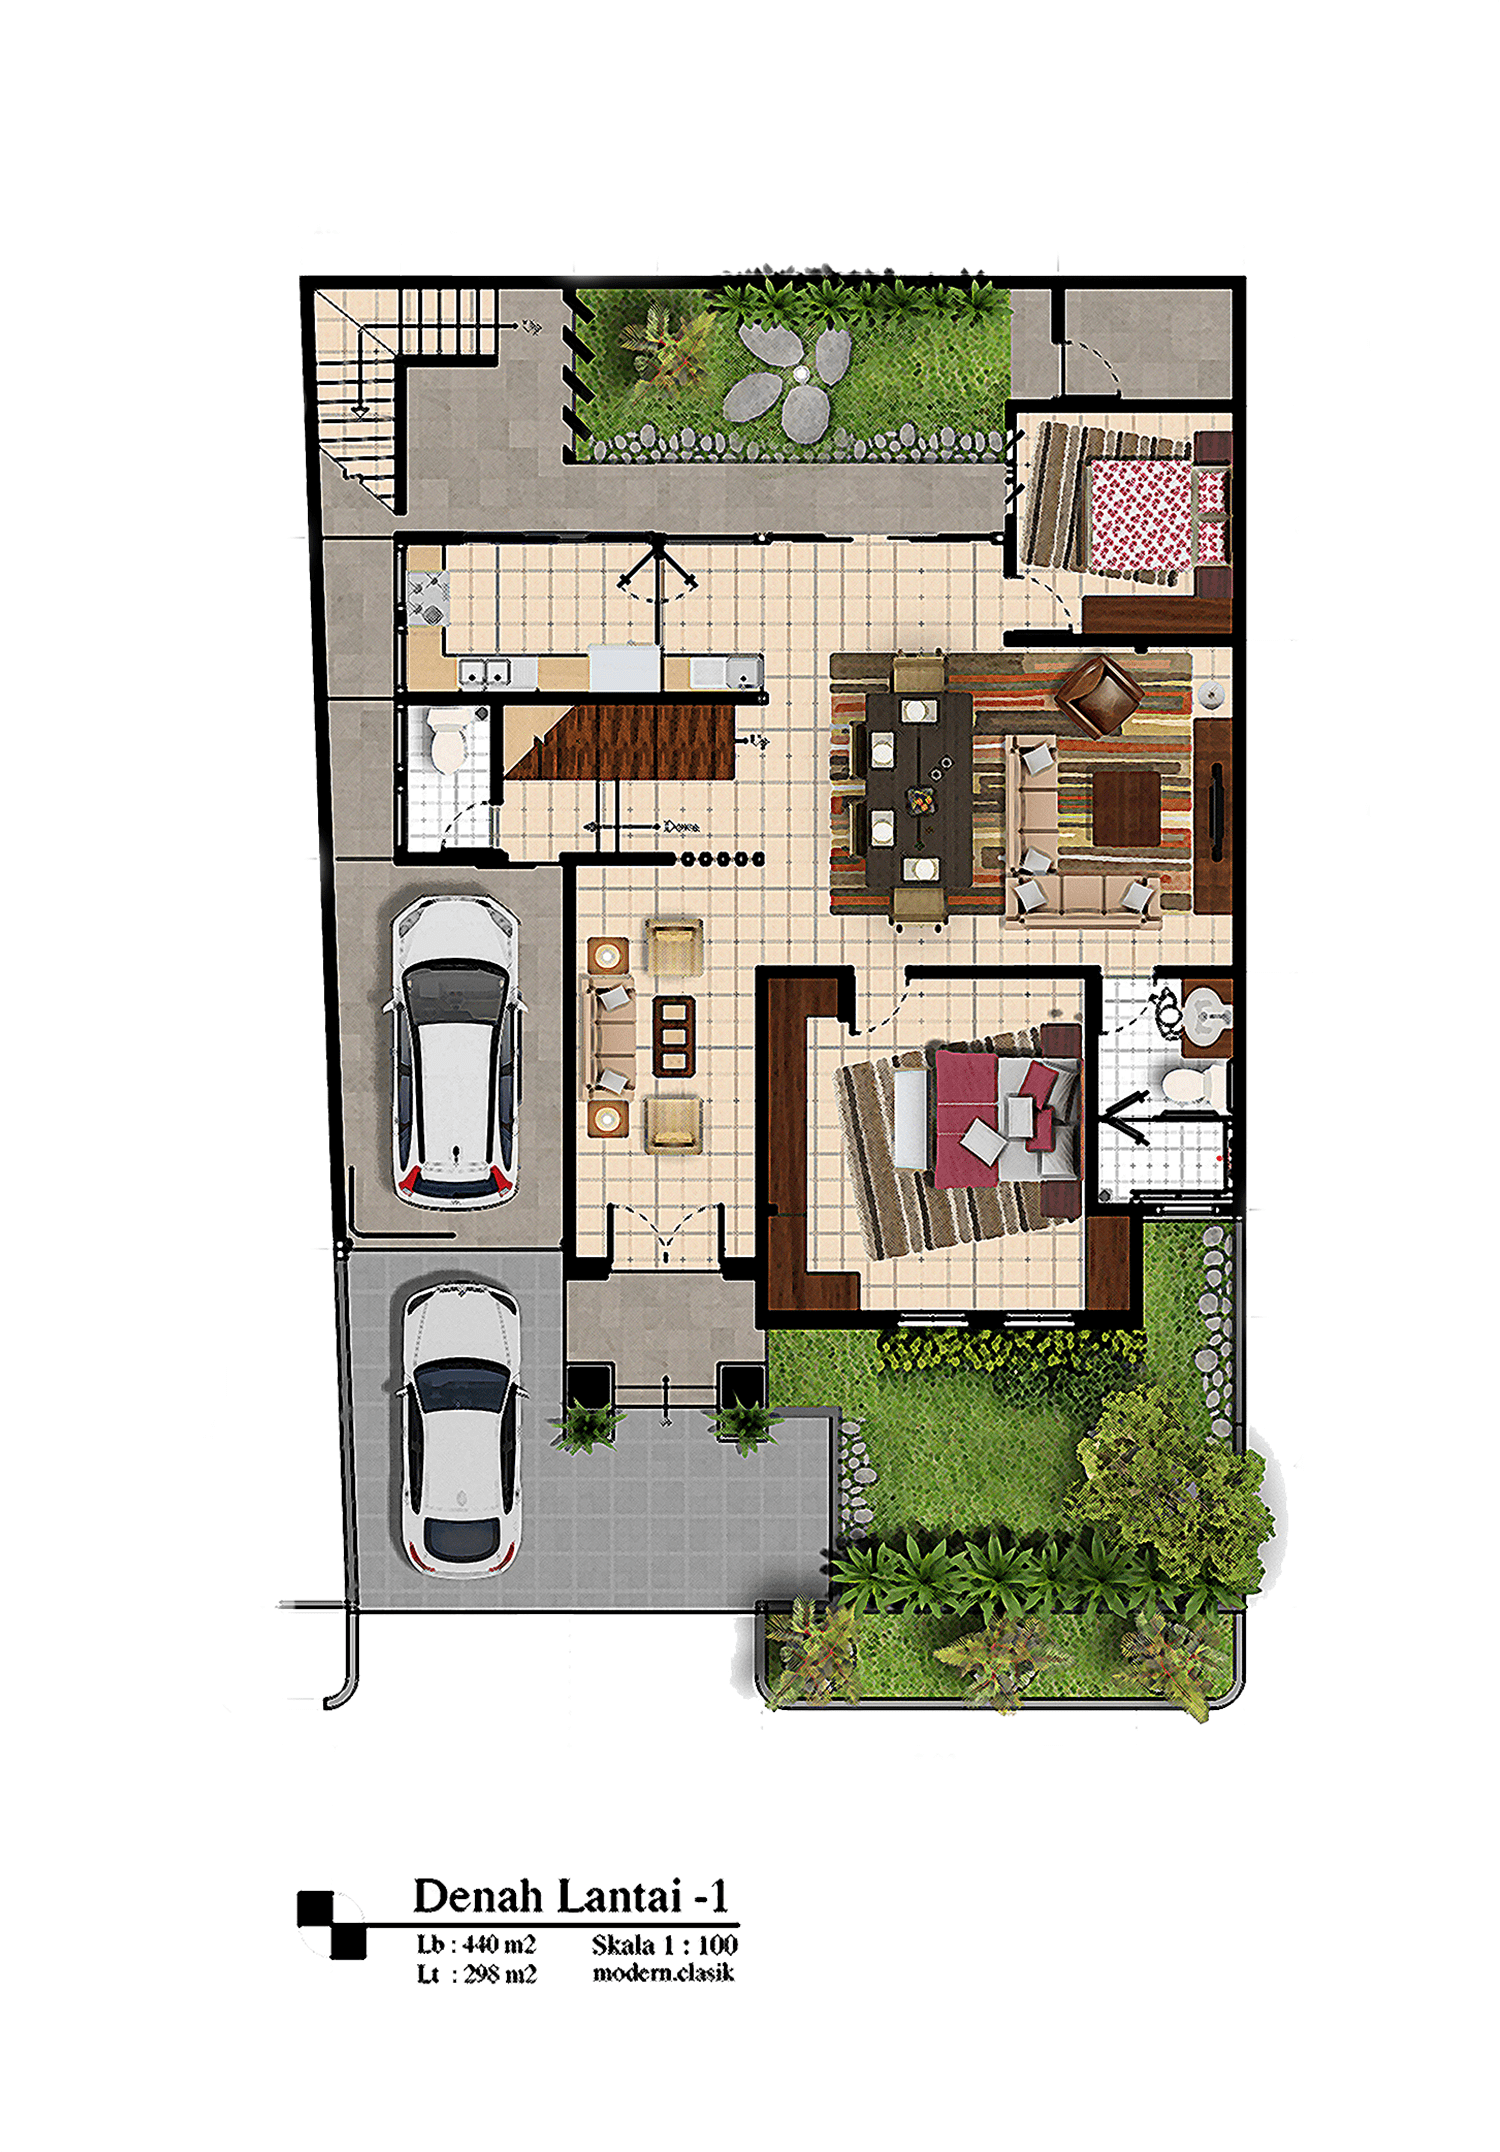 gambar desain denah layout rumah lantai satu modern classic arsitektur di malang jawa timur